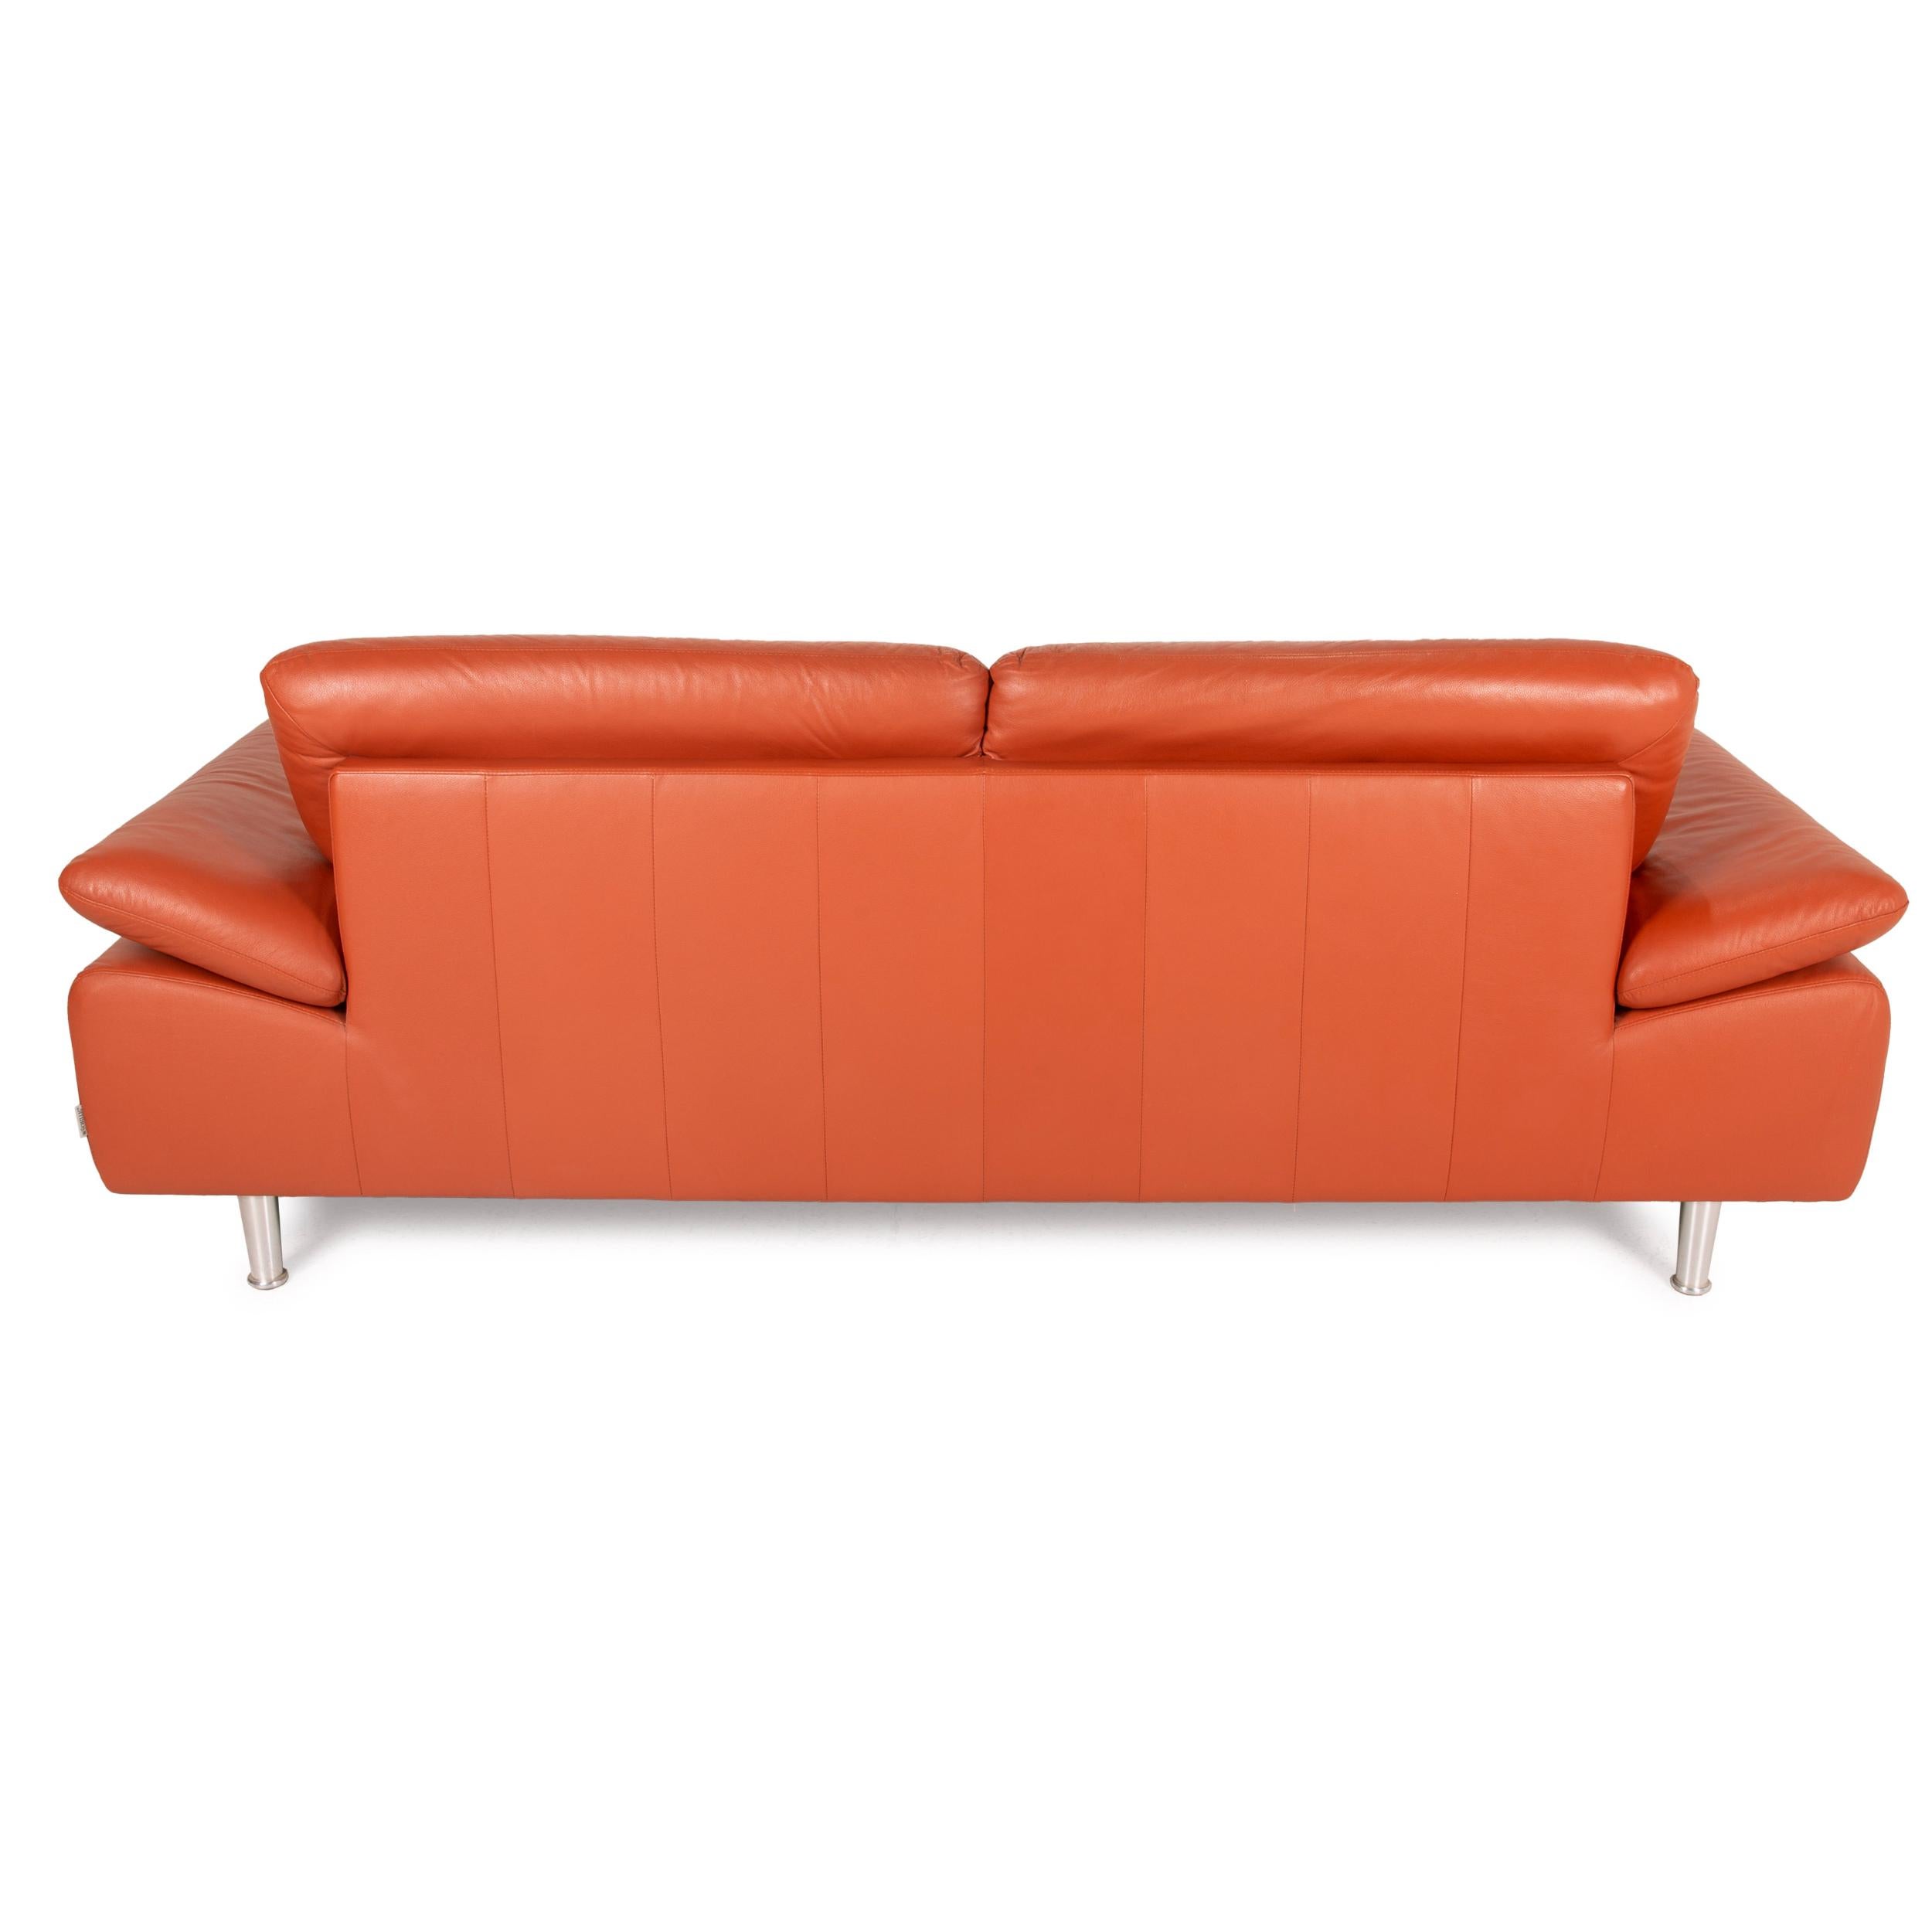 Willi Schillig Loop Leather Sofa Orange Three-Seater Couch at 1stDibs |  orange leather couch, orange leather sofa, orange leather furniture